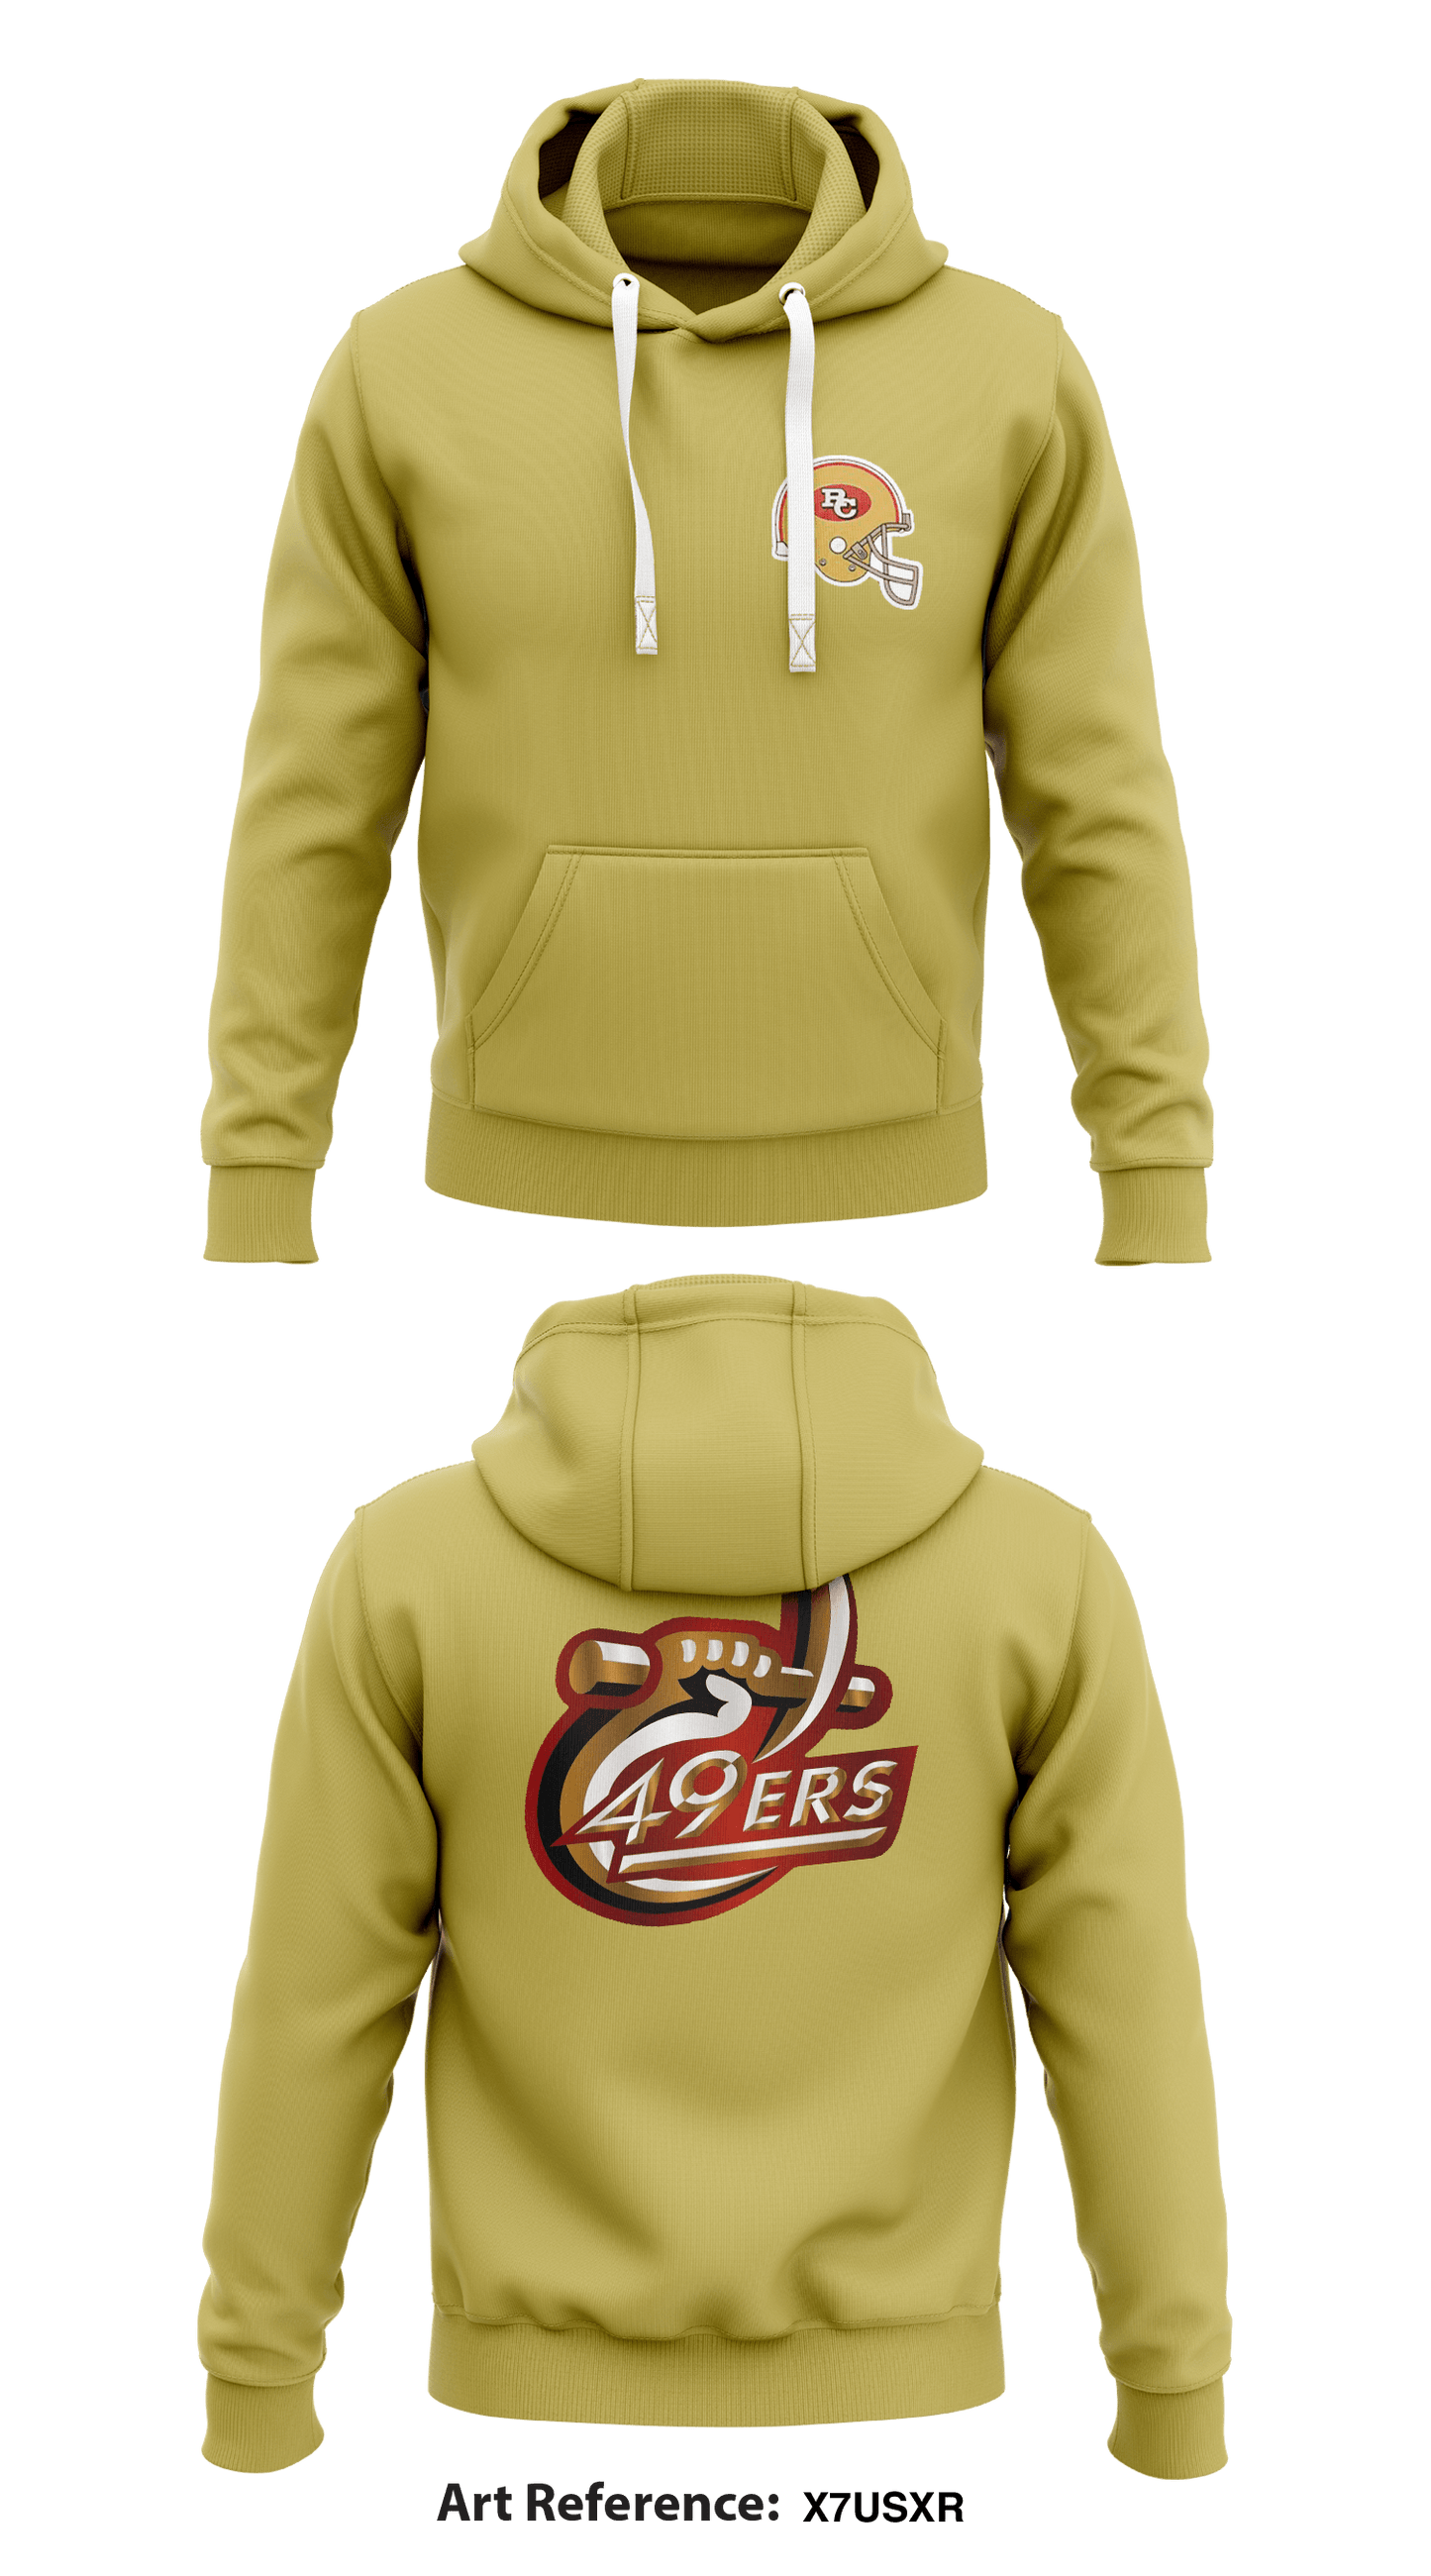 49ers Store 1 Core Men's Hooded Performance Sweatshirt - X7usXR